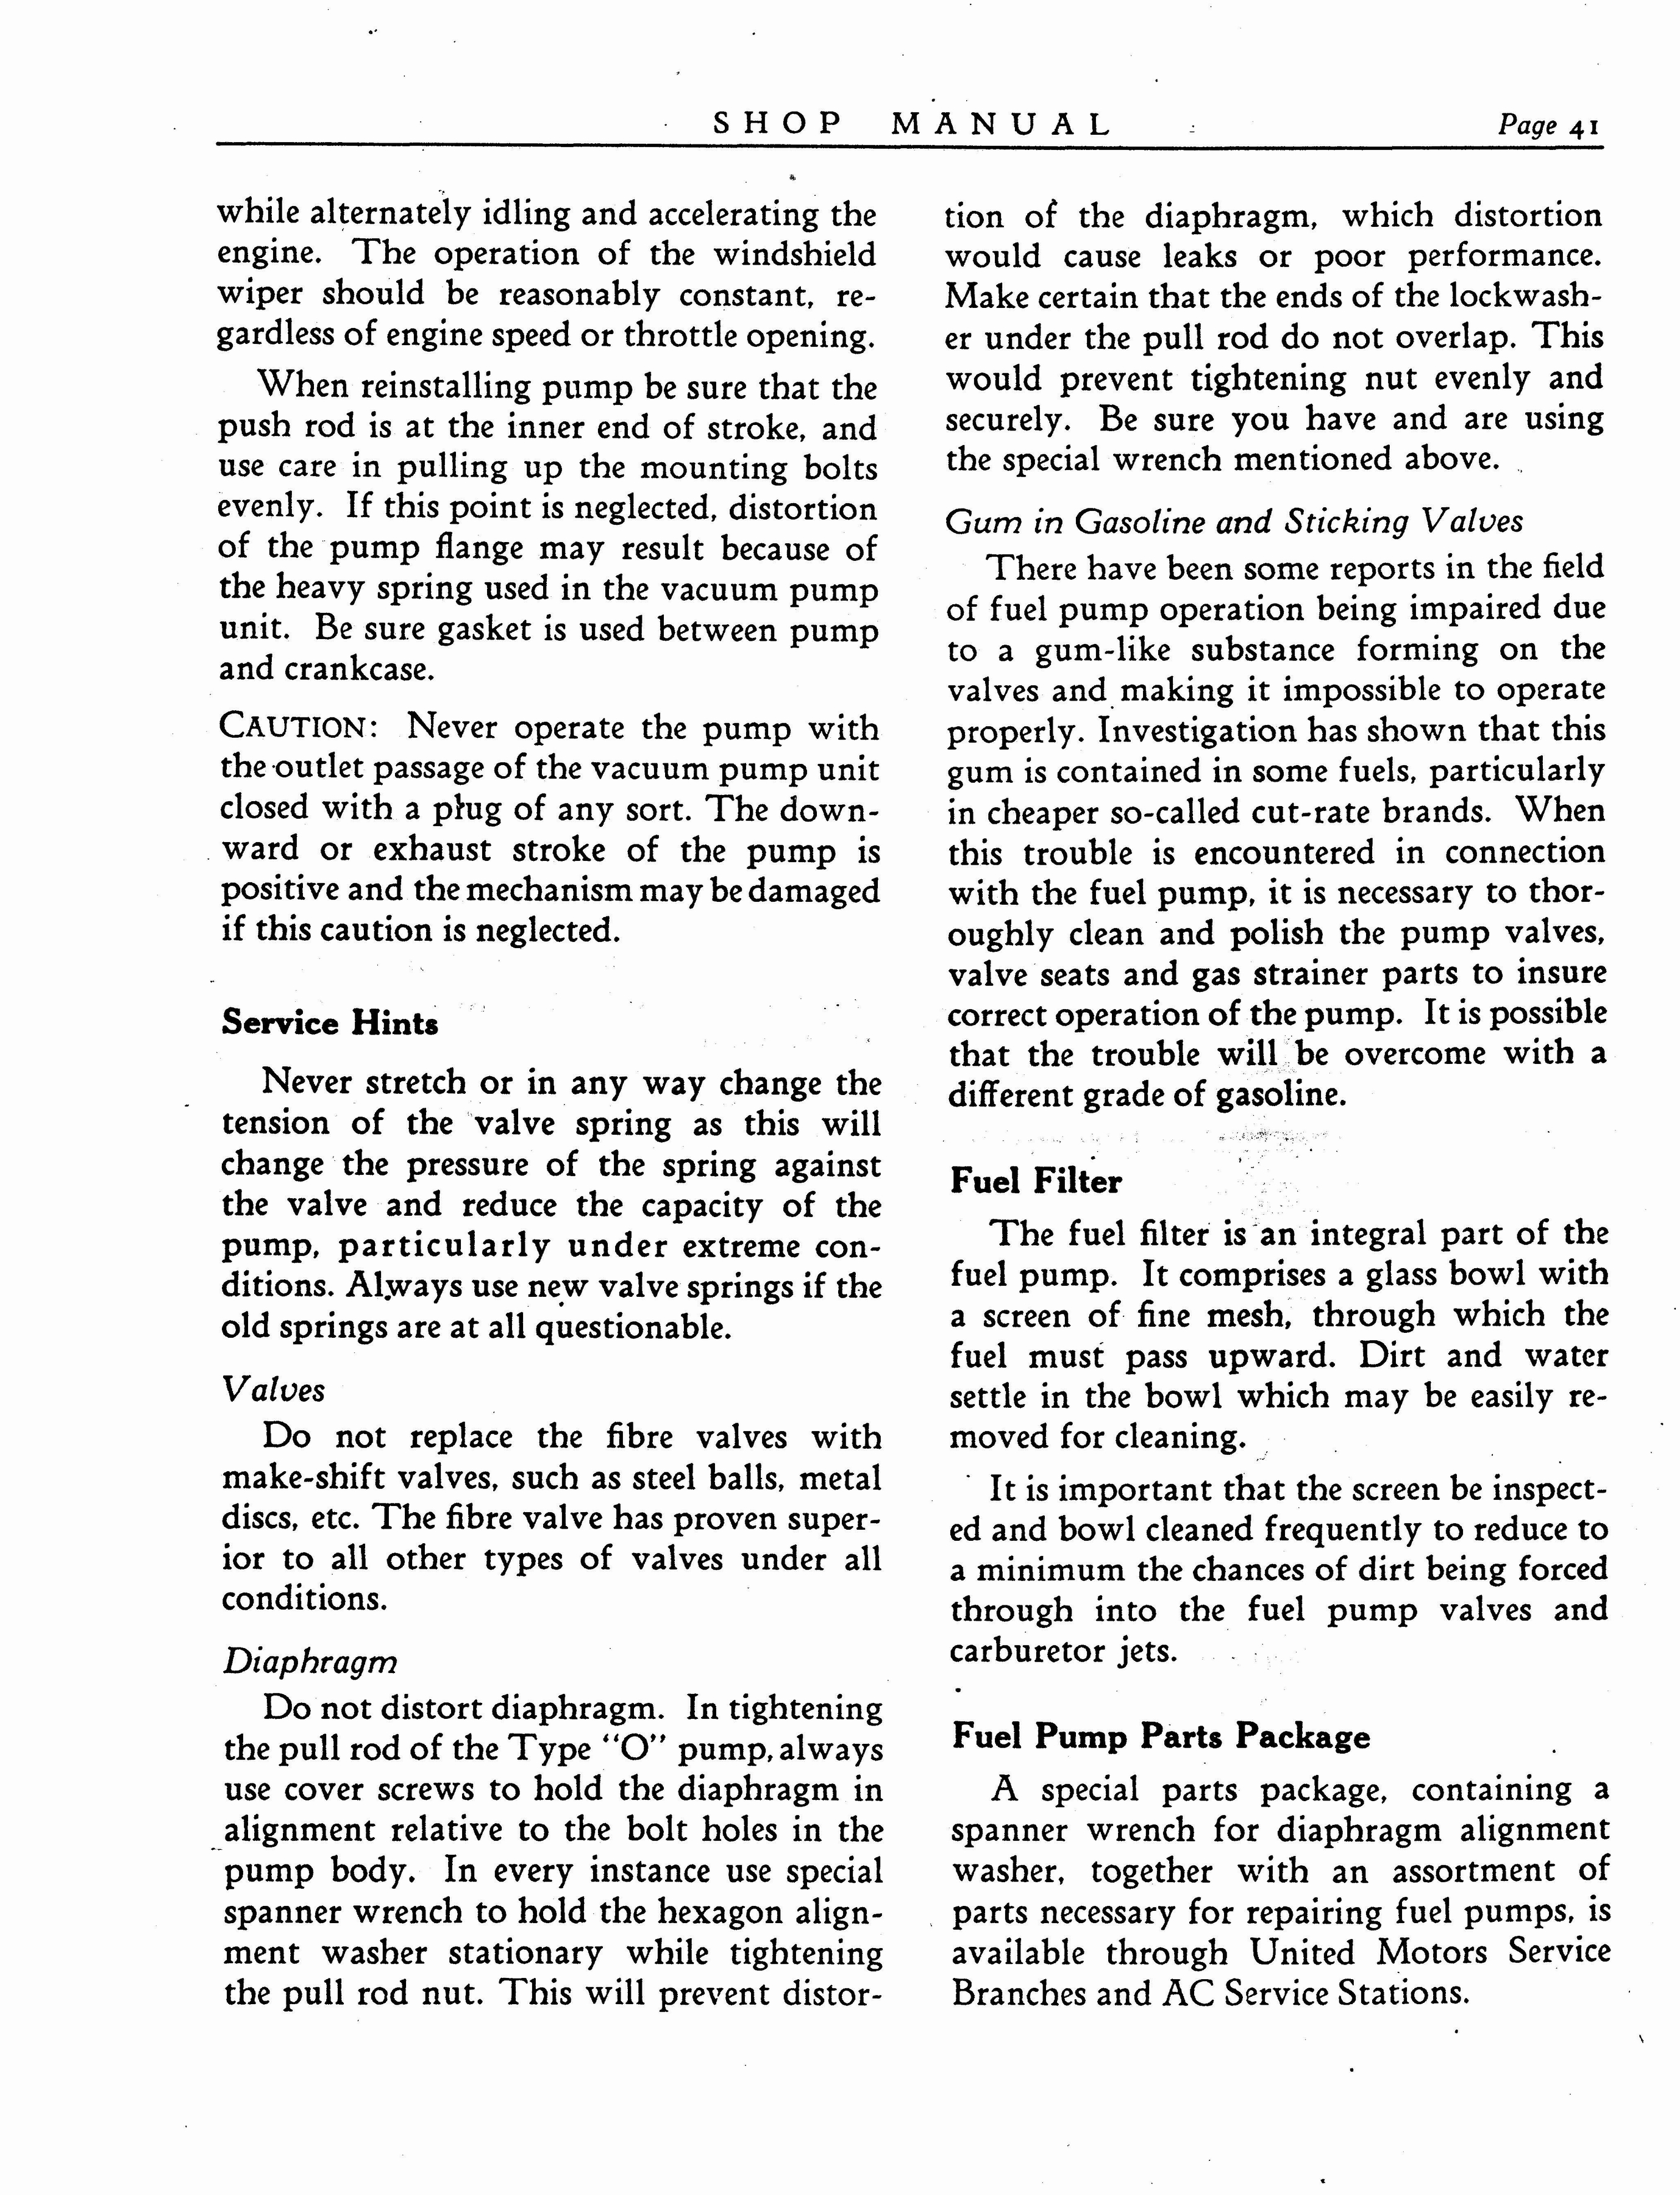 n_1933 Buick Shop Manual_Page_042.jpg